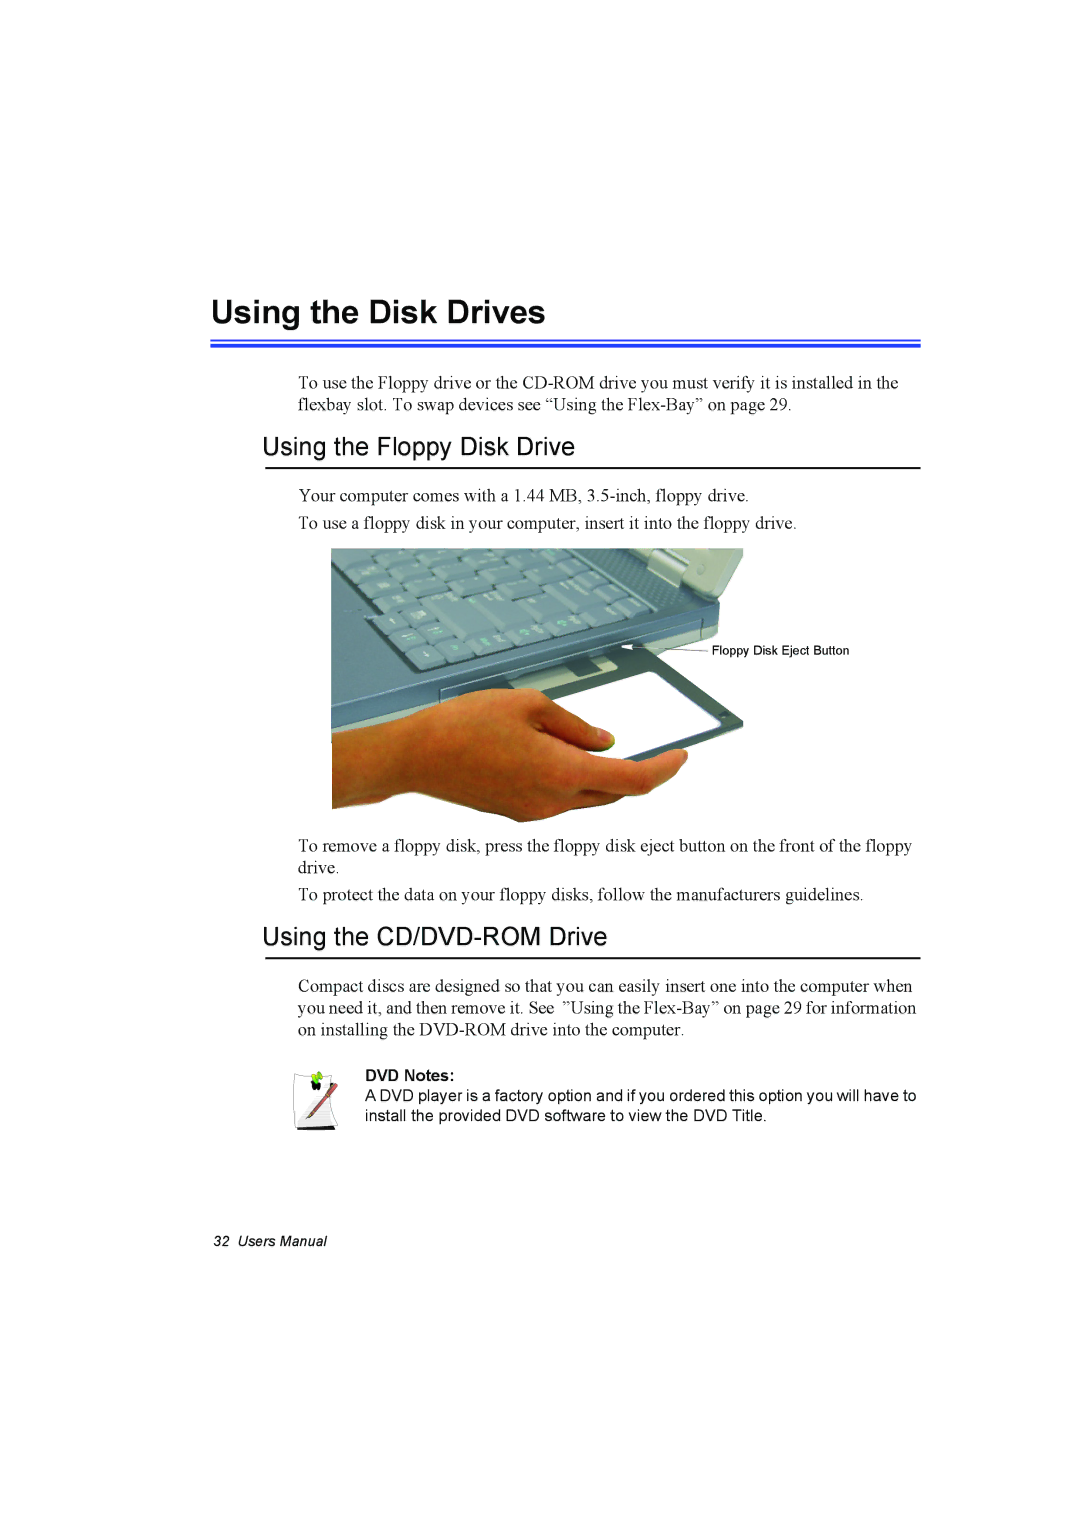 Samsung NP10FP00MF/SUK manual Using the Disk Drives, Using the Floppy Disk Drive, Using the CD/DVD-ROM Drive, DVD Notes 